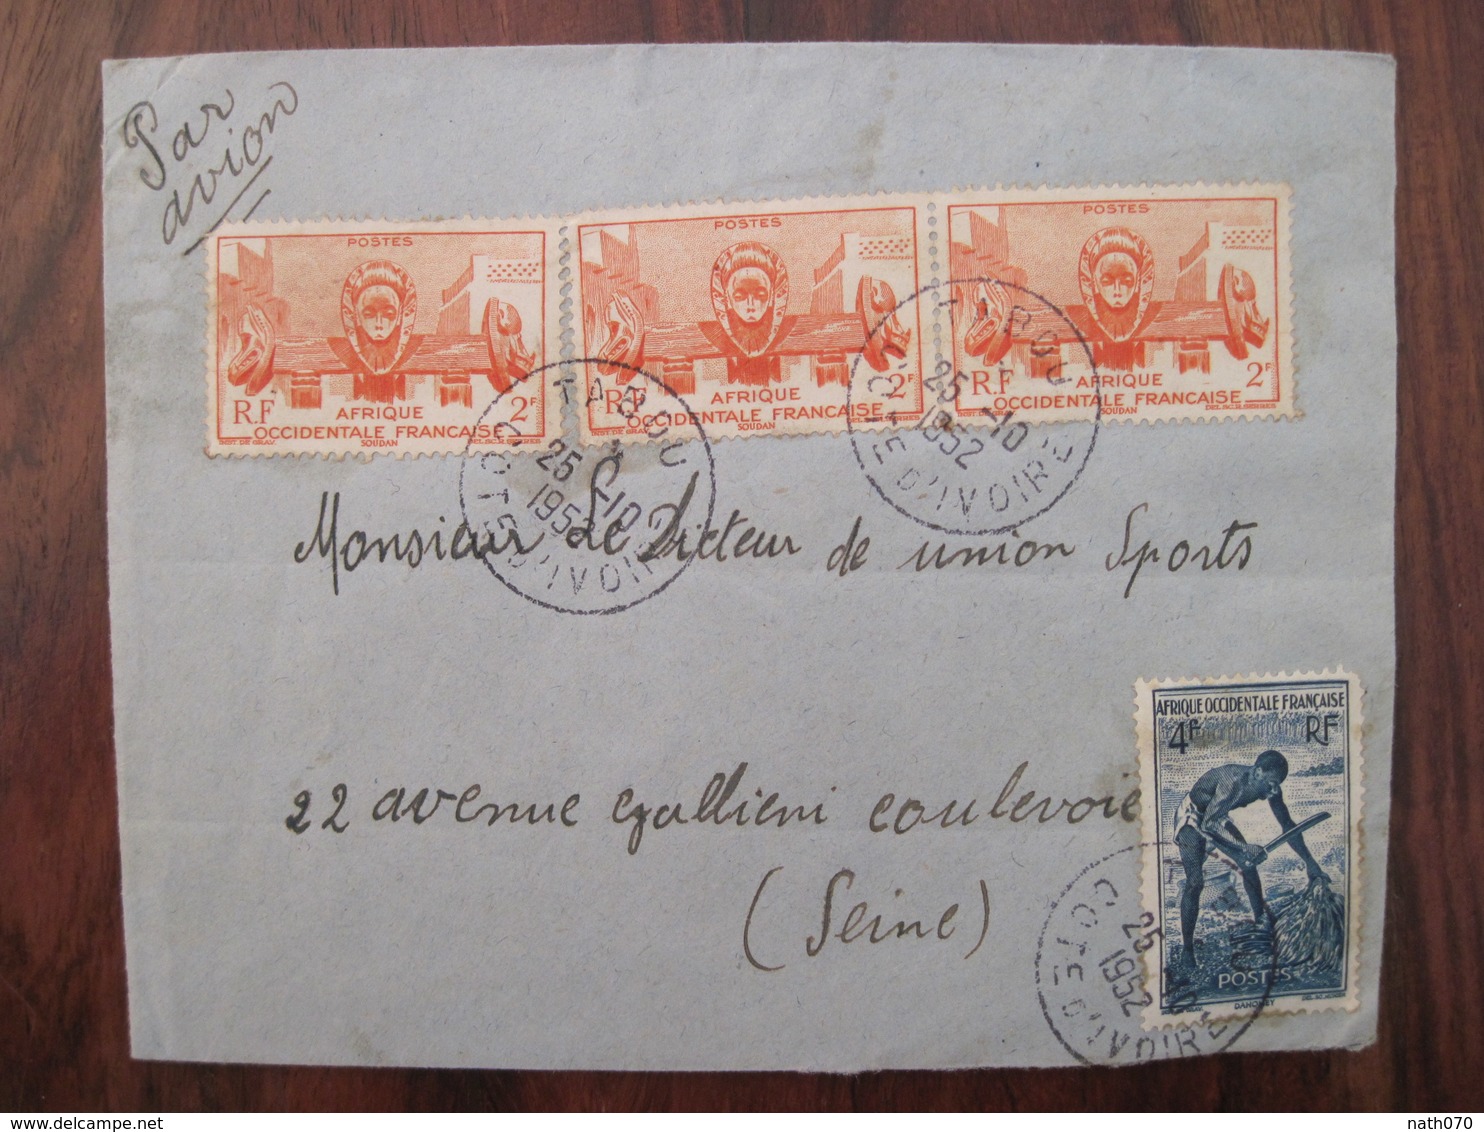 Cote D'Ivoire 1952 France TABOU AOF Timbre Lettre Enveloppe Cover Colonie Elfenbeinküste Ivoiry Coast - Storia Postale